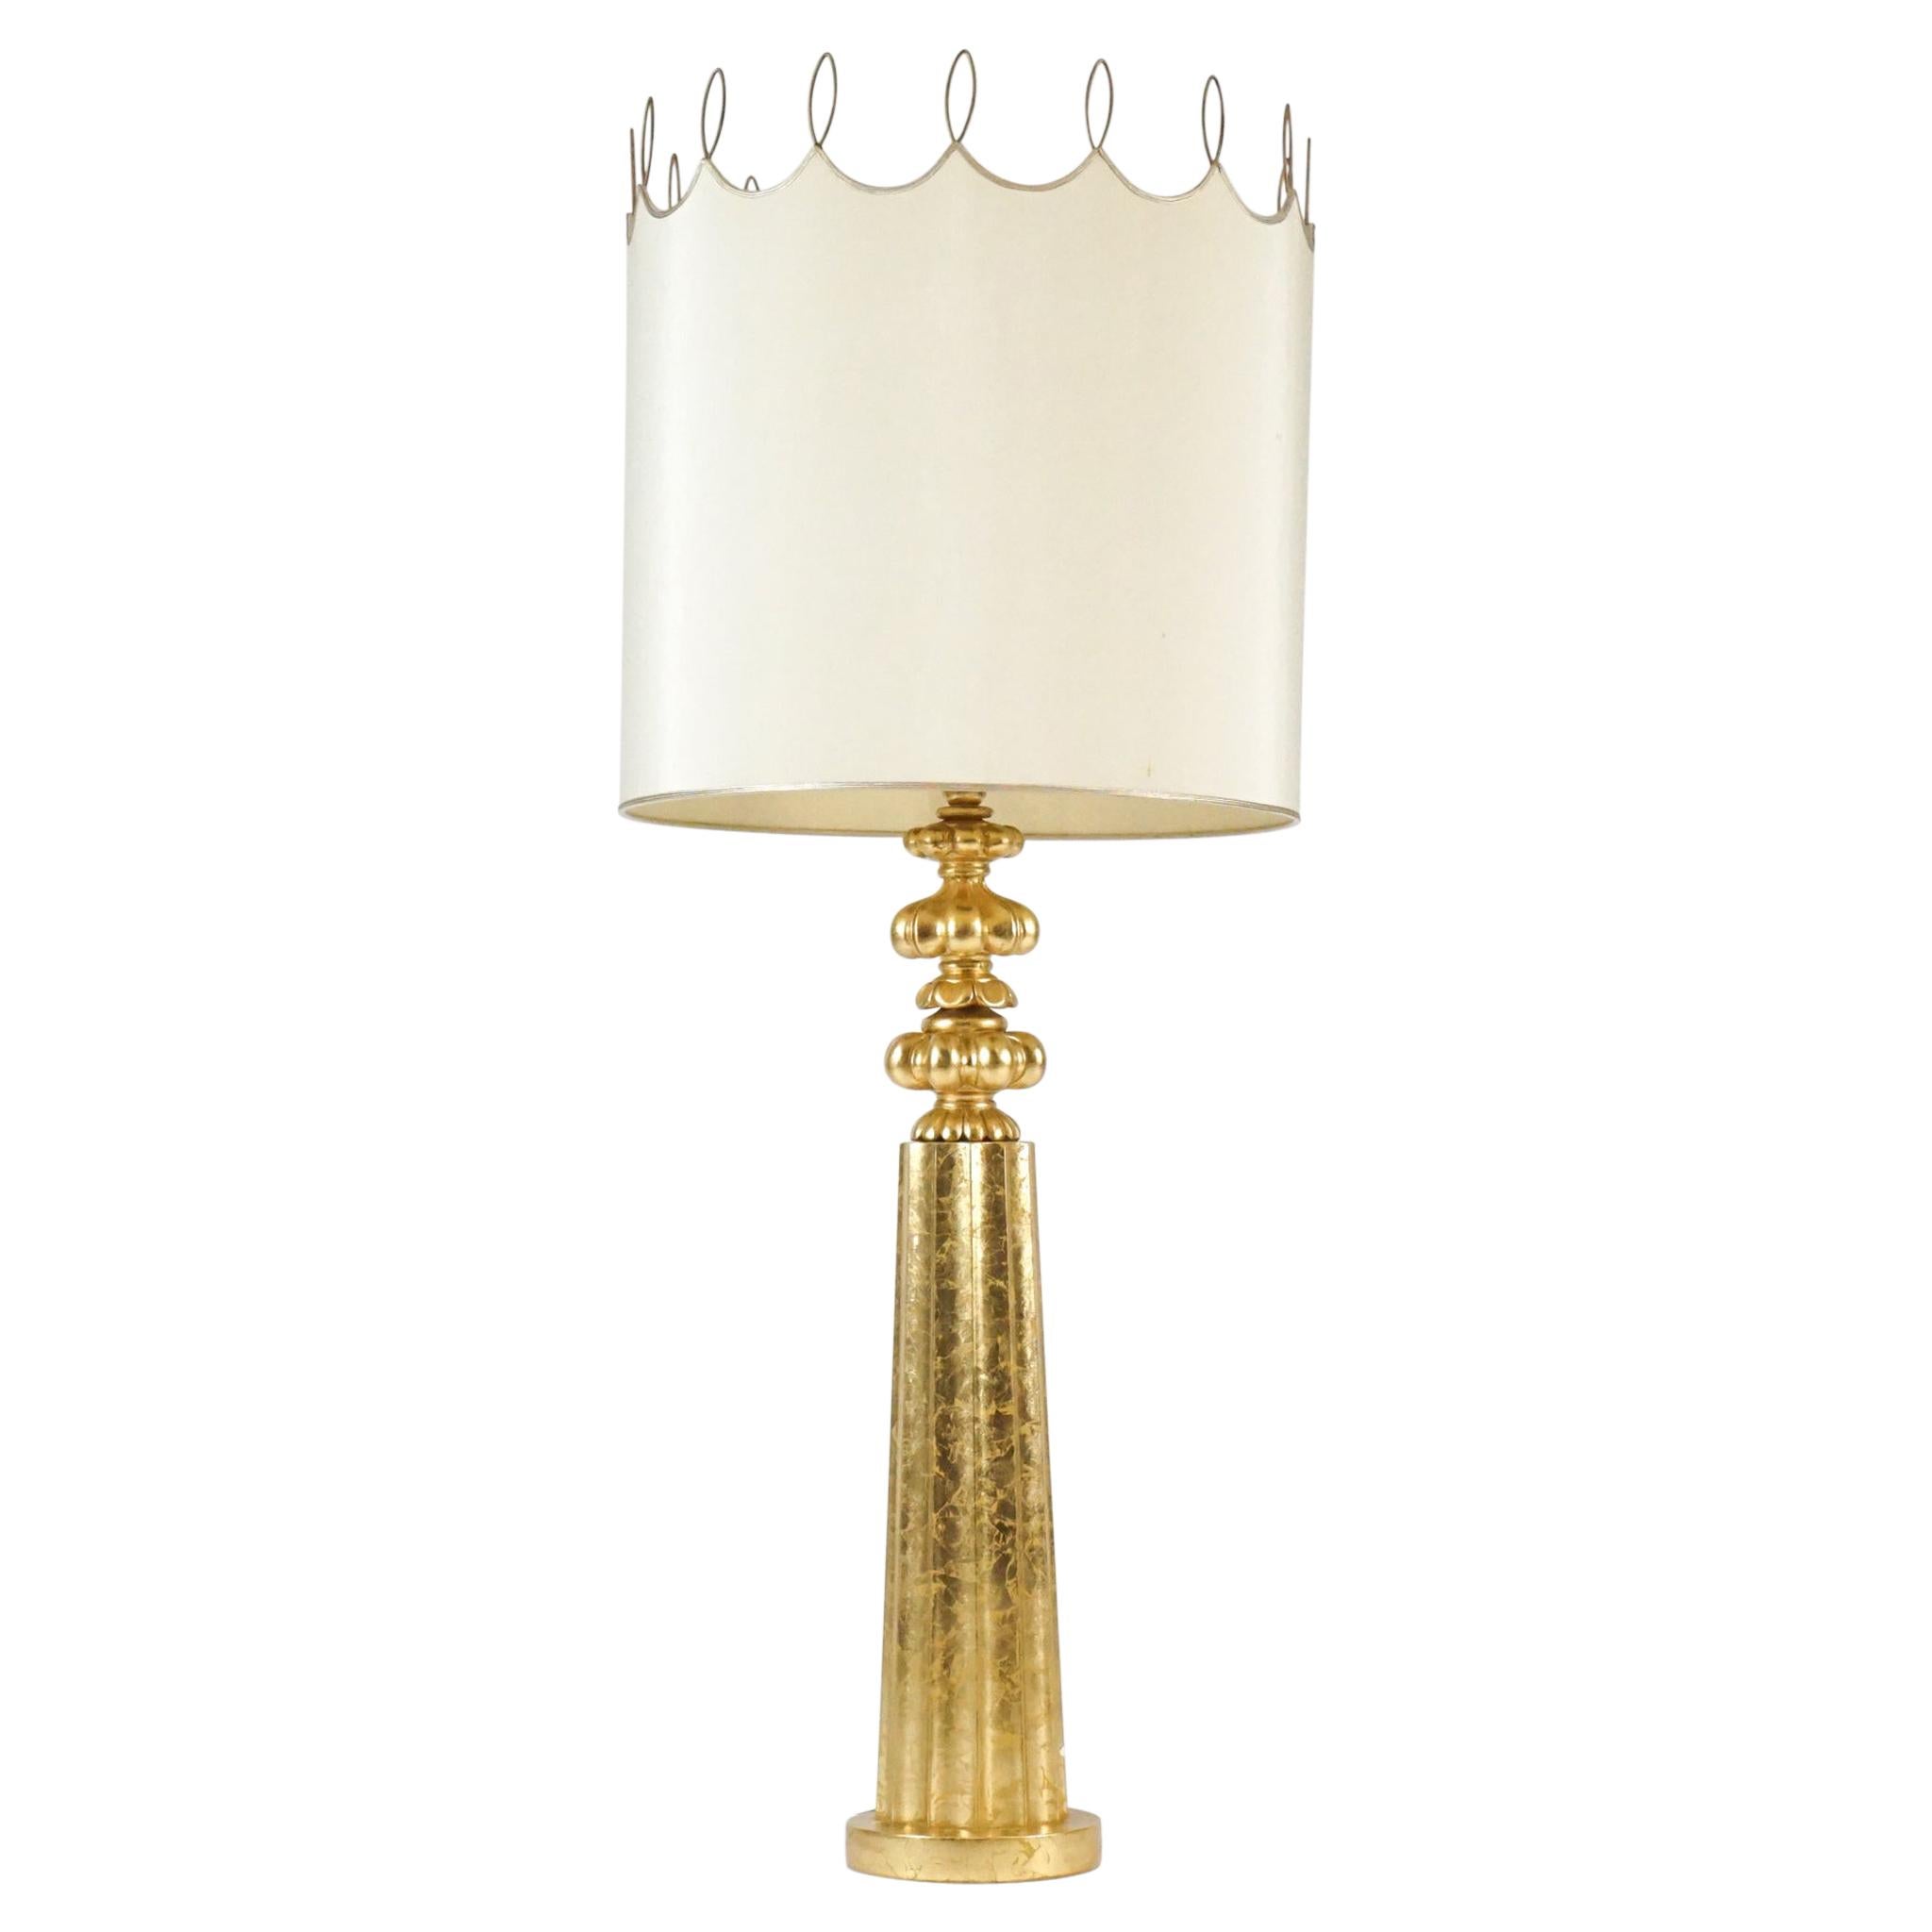 Elegant Monumental & Heavy Gold Leaf Lamp with Decorative Shade, Tommi Parzinger